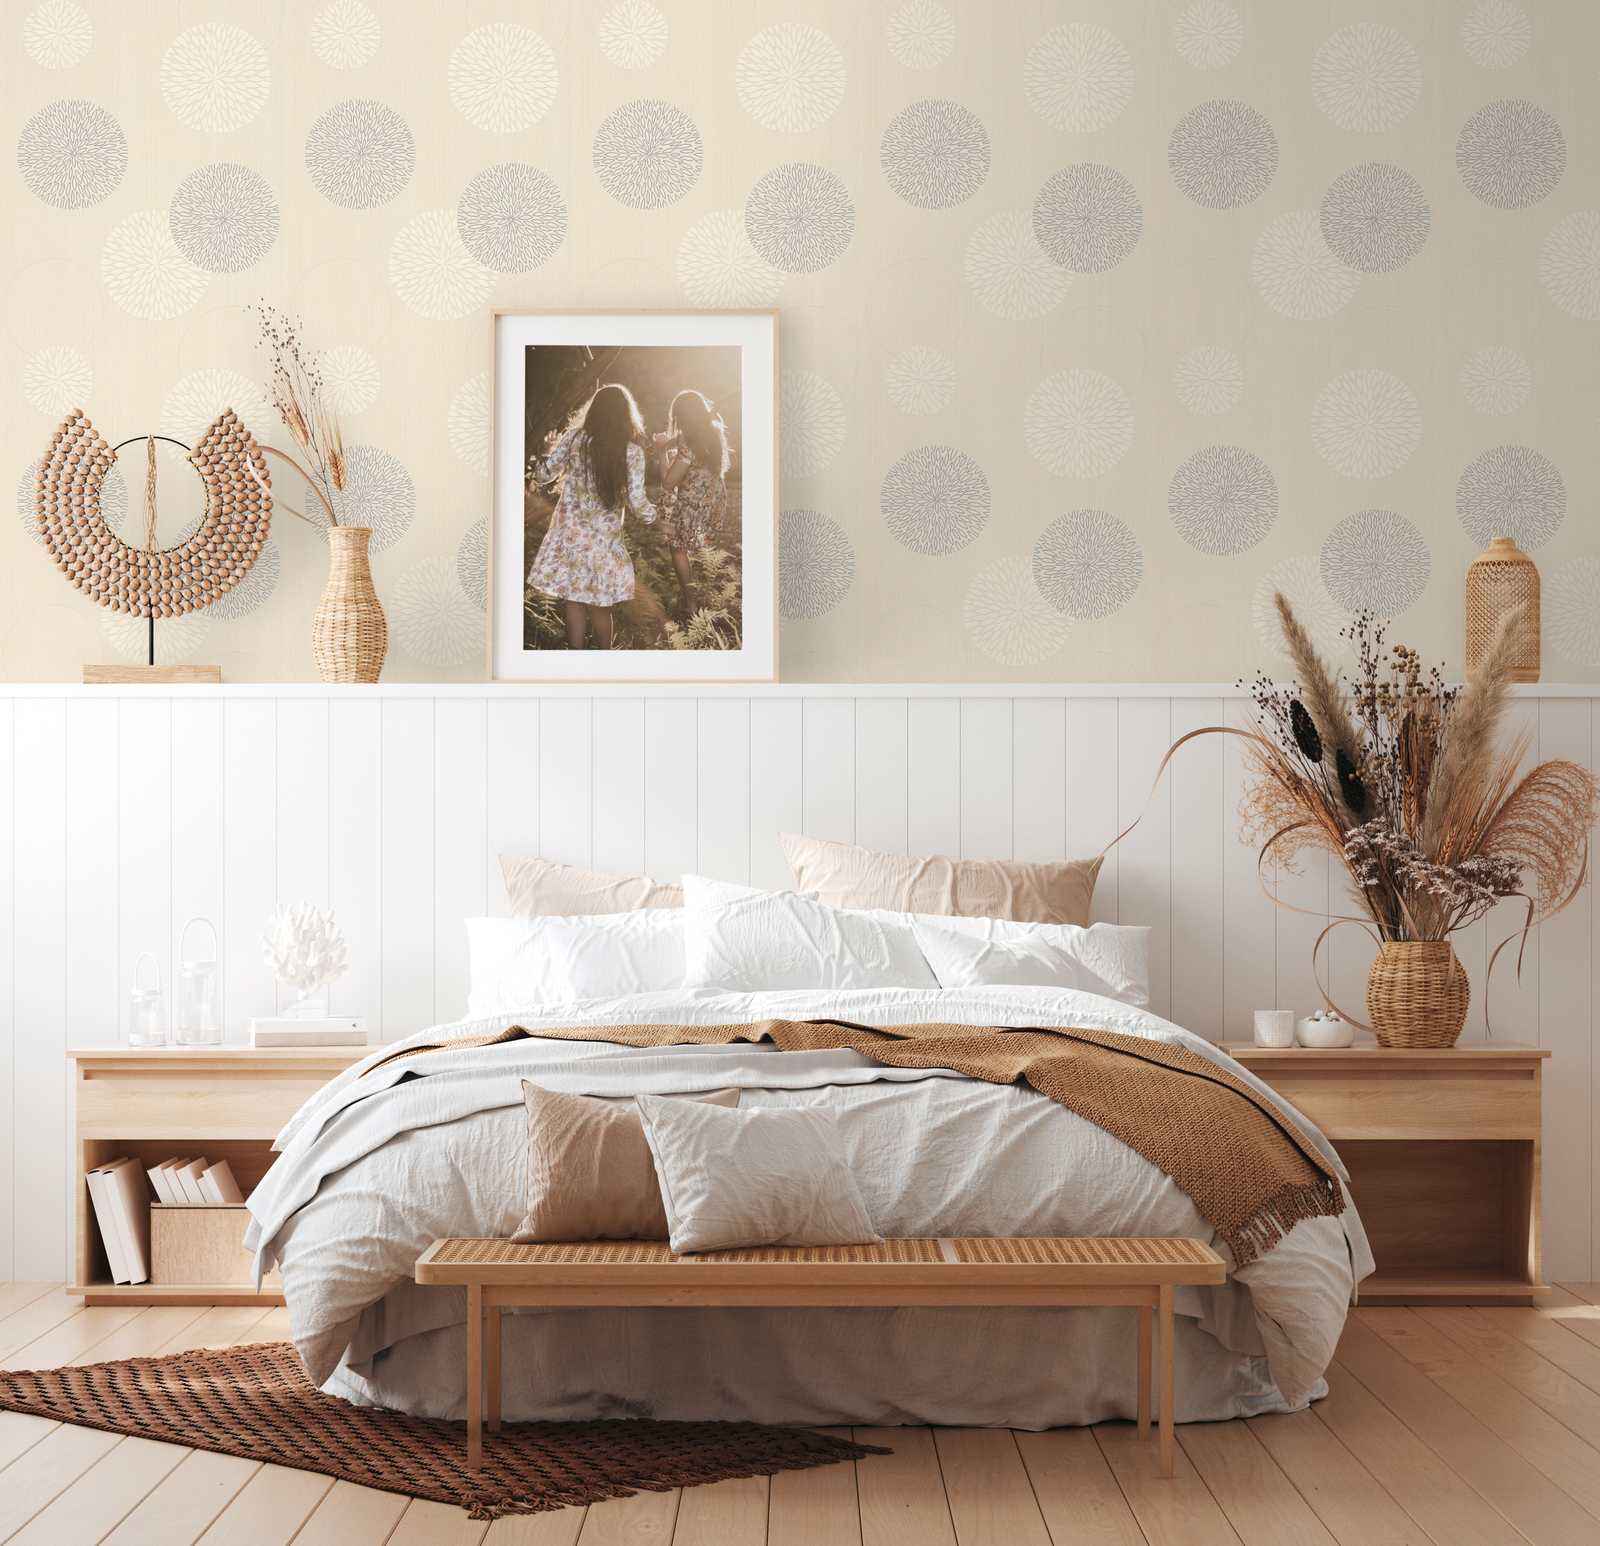             Non-woven wallpaper abstract floral design - beige, metallic
        